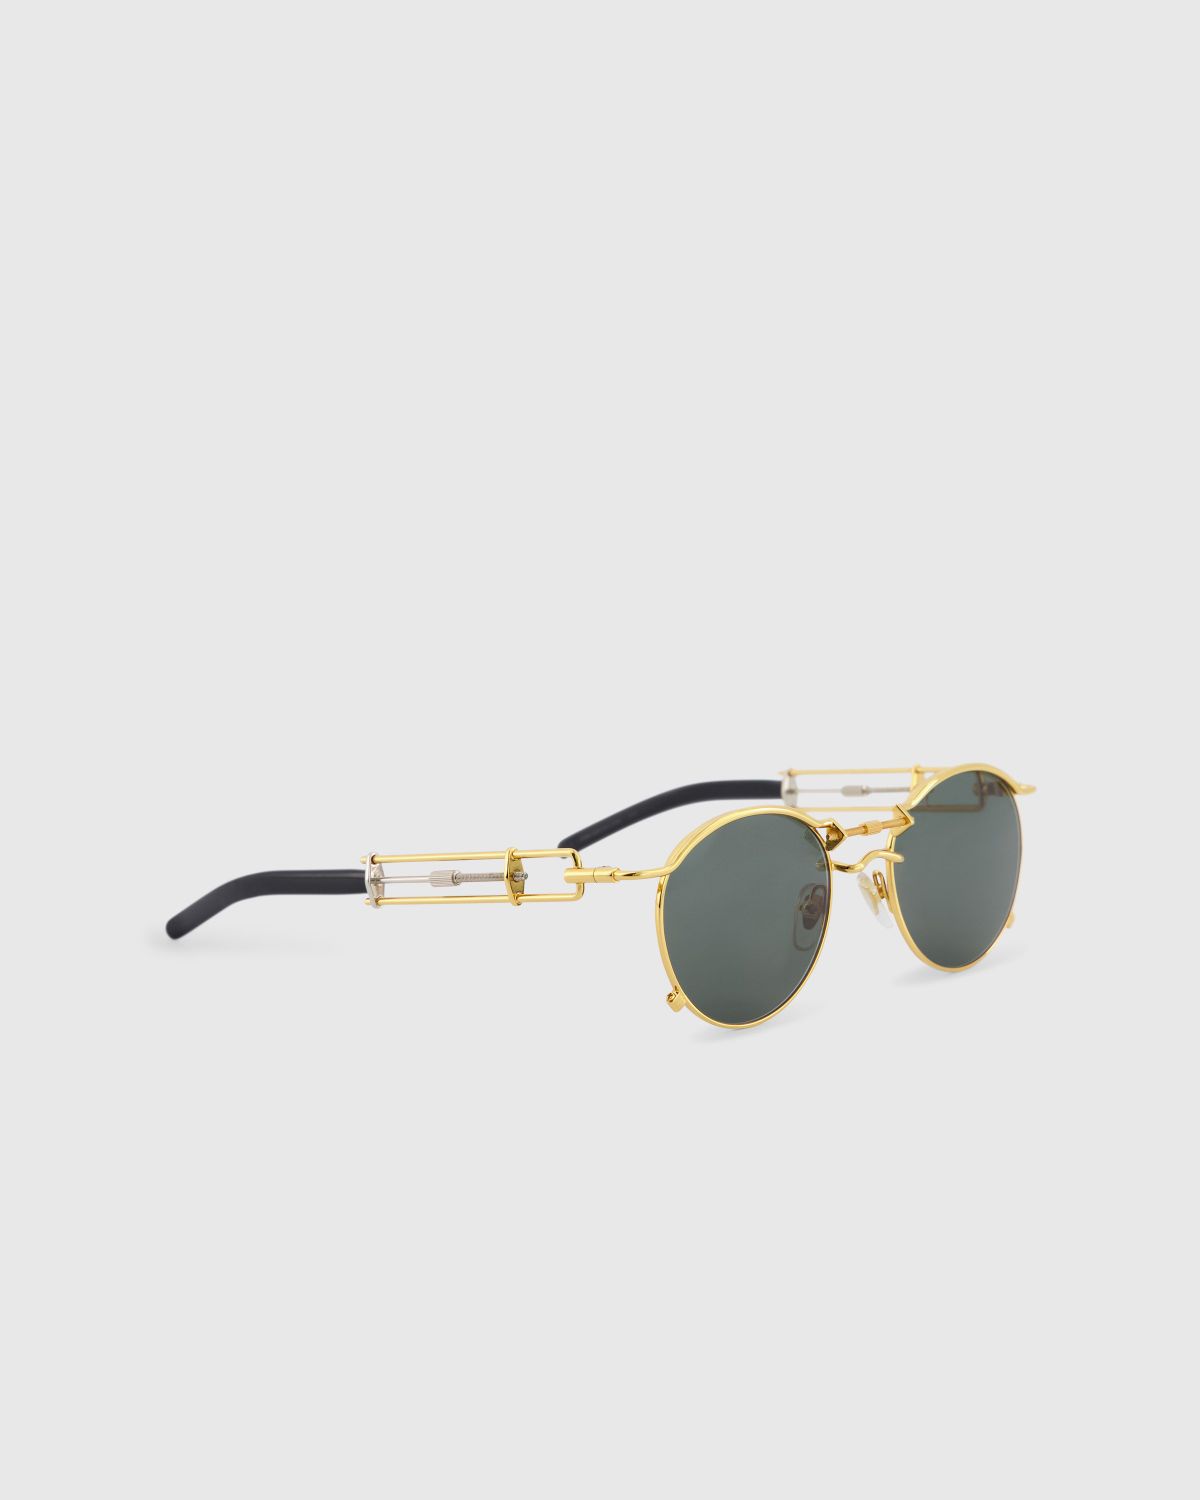 Jean Paul Gaultier x Burna Boy – 56-0174 Pas De Vis Sunglasses Yellow - Sunglasses - Yellow - Image 2